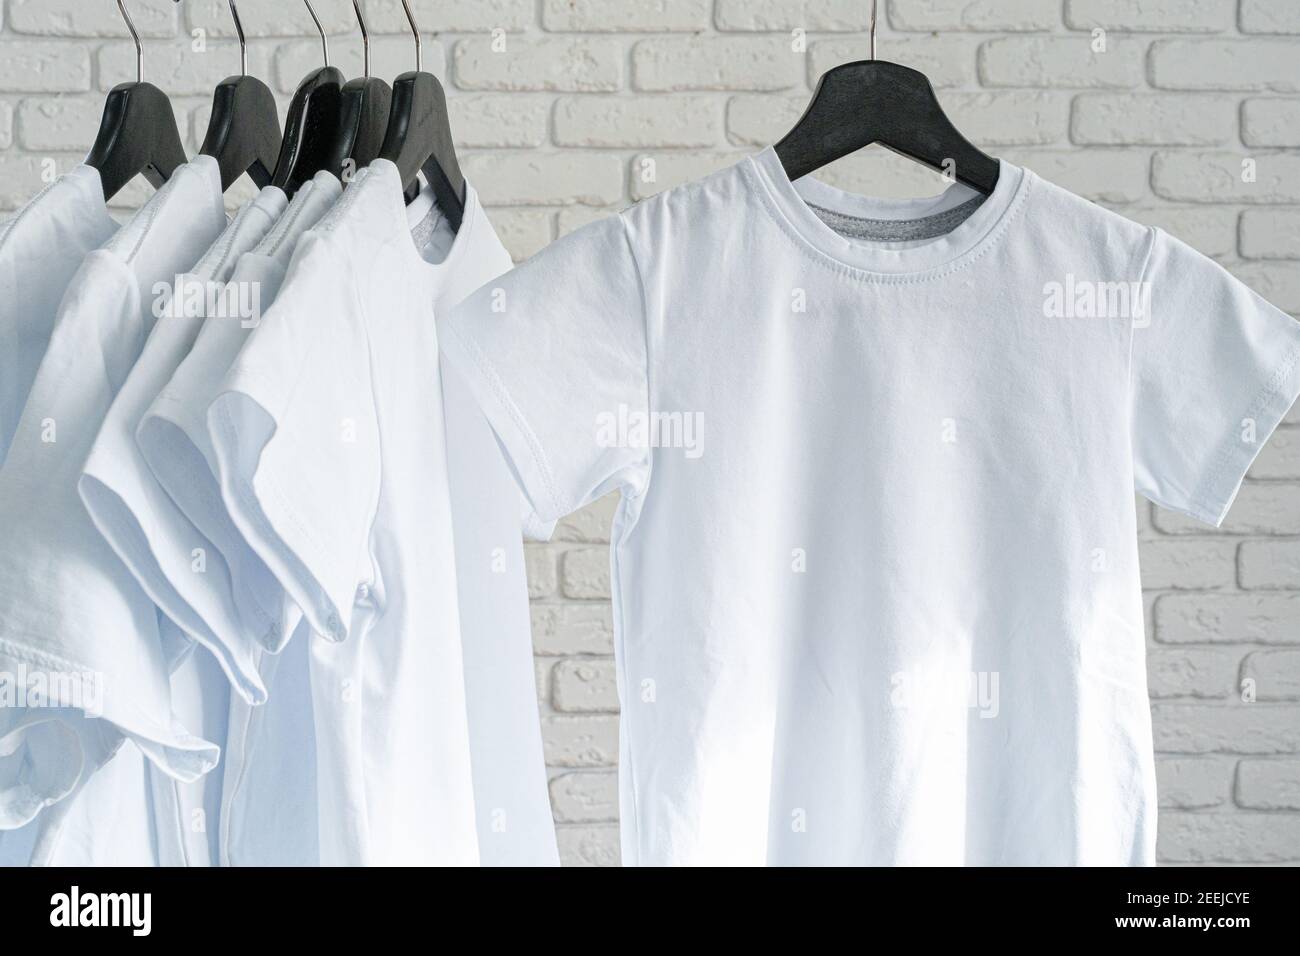 White t-shirt hanging on hanger against brick wall Stock Photo